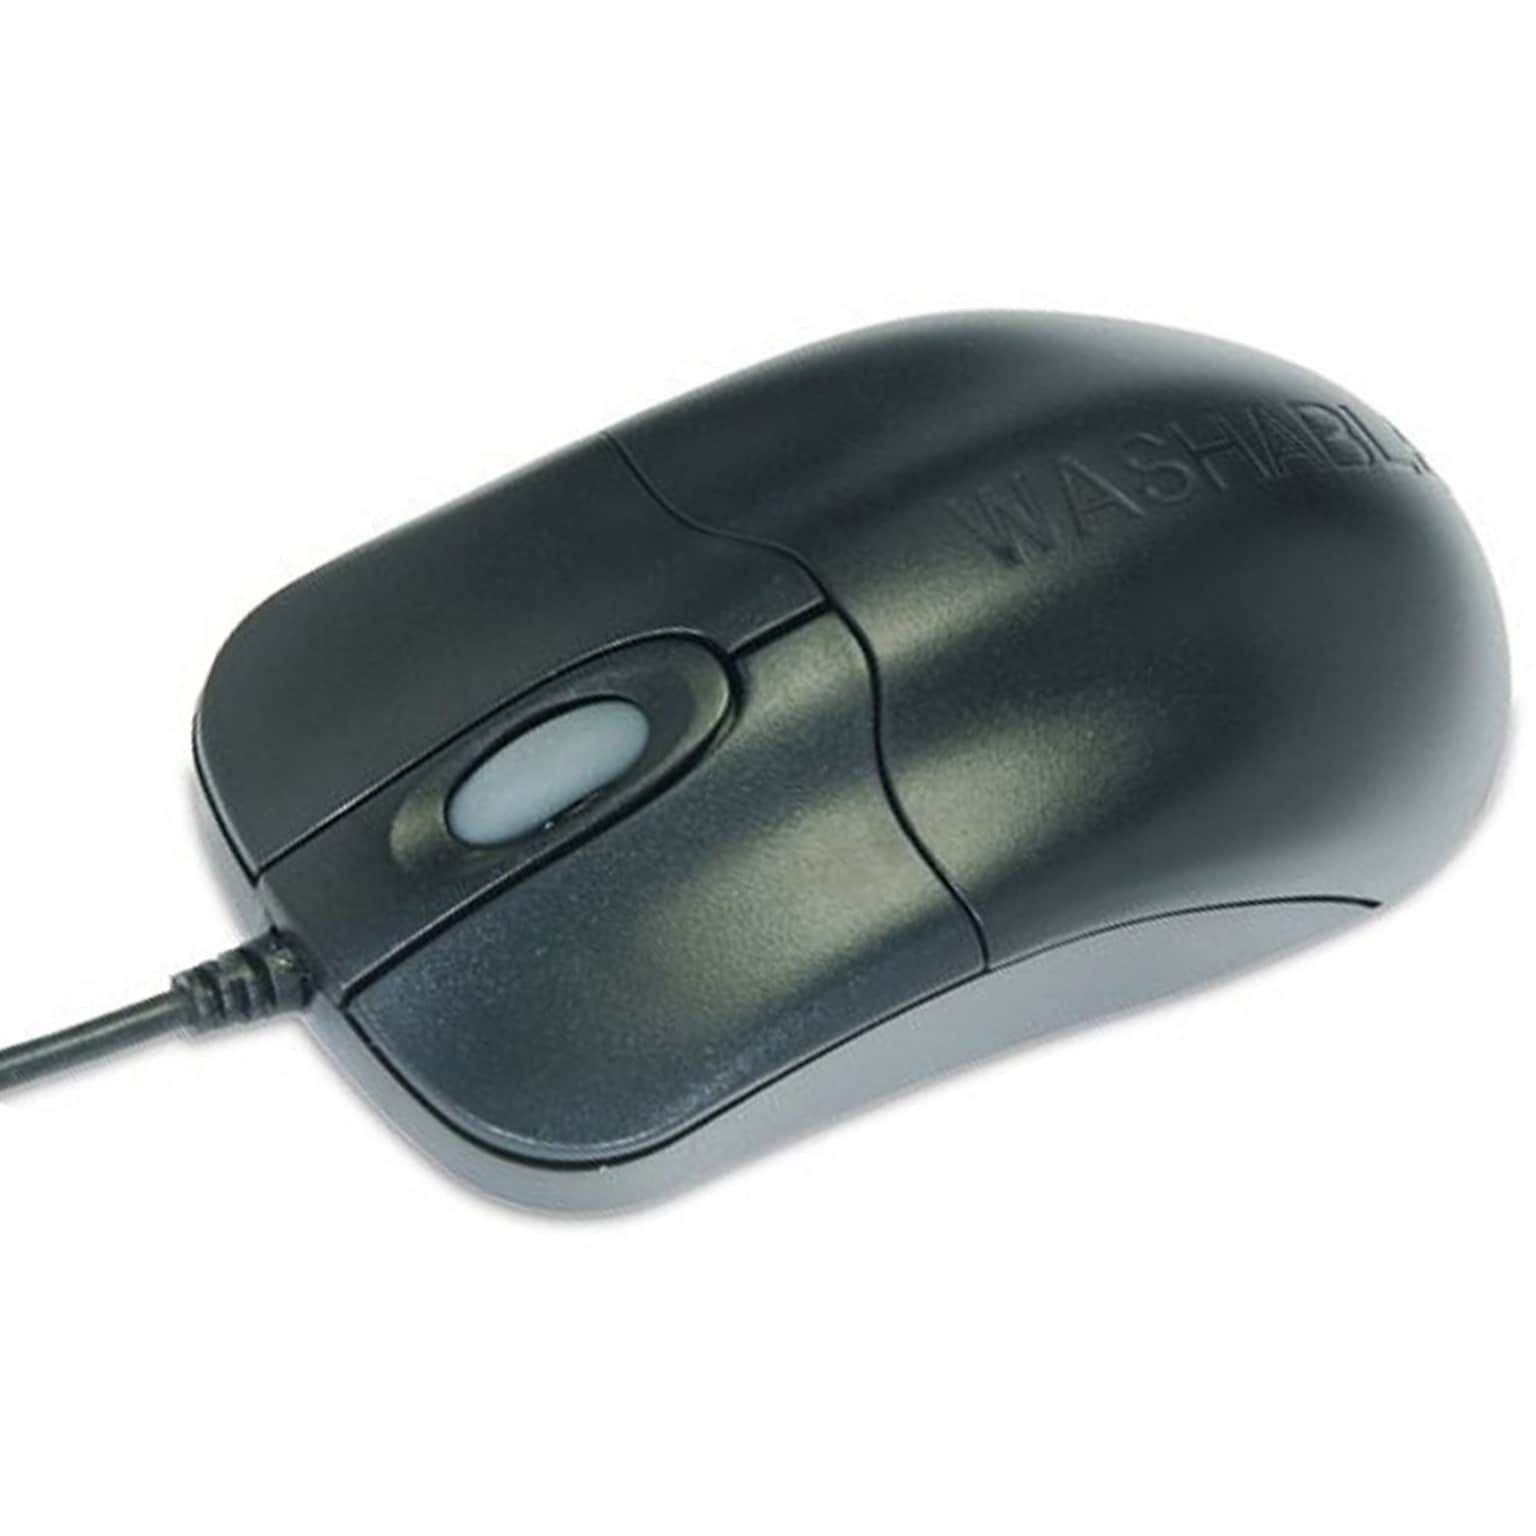 Seal Shield Silver Storm STM042 Optical Mouse, Black